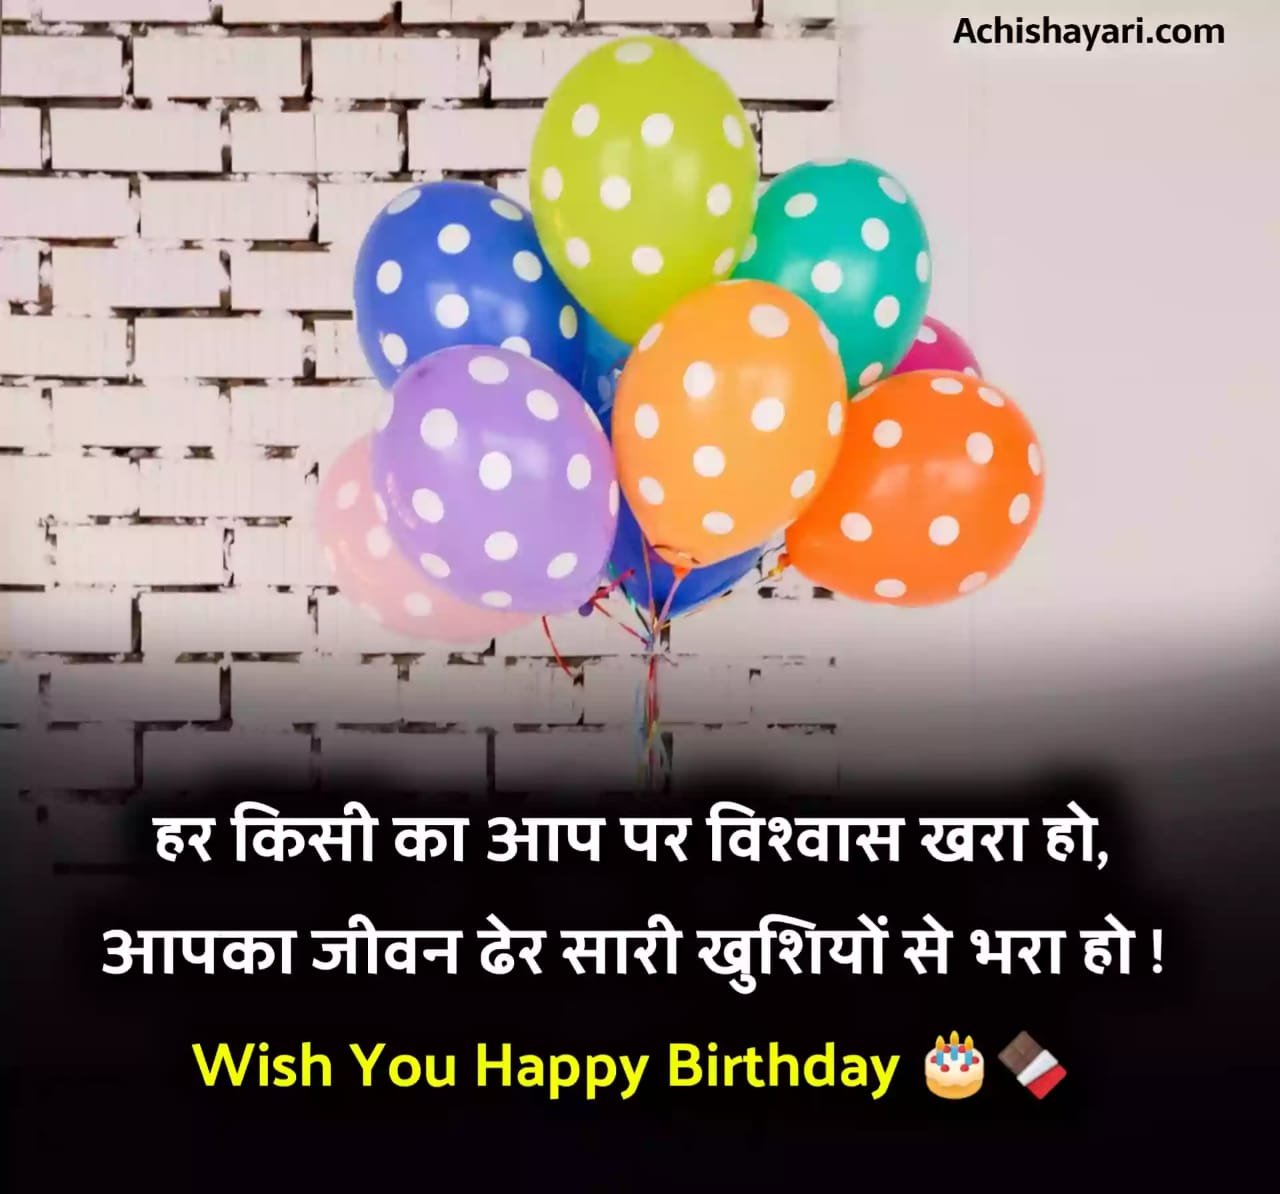 Birthday Wishes in Hindi Image